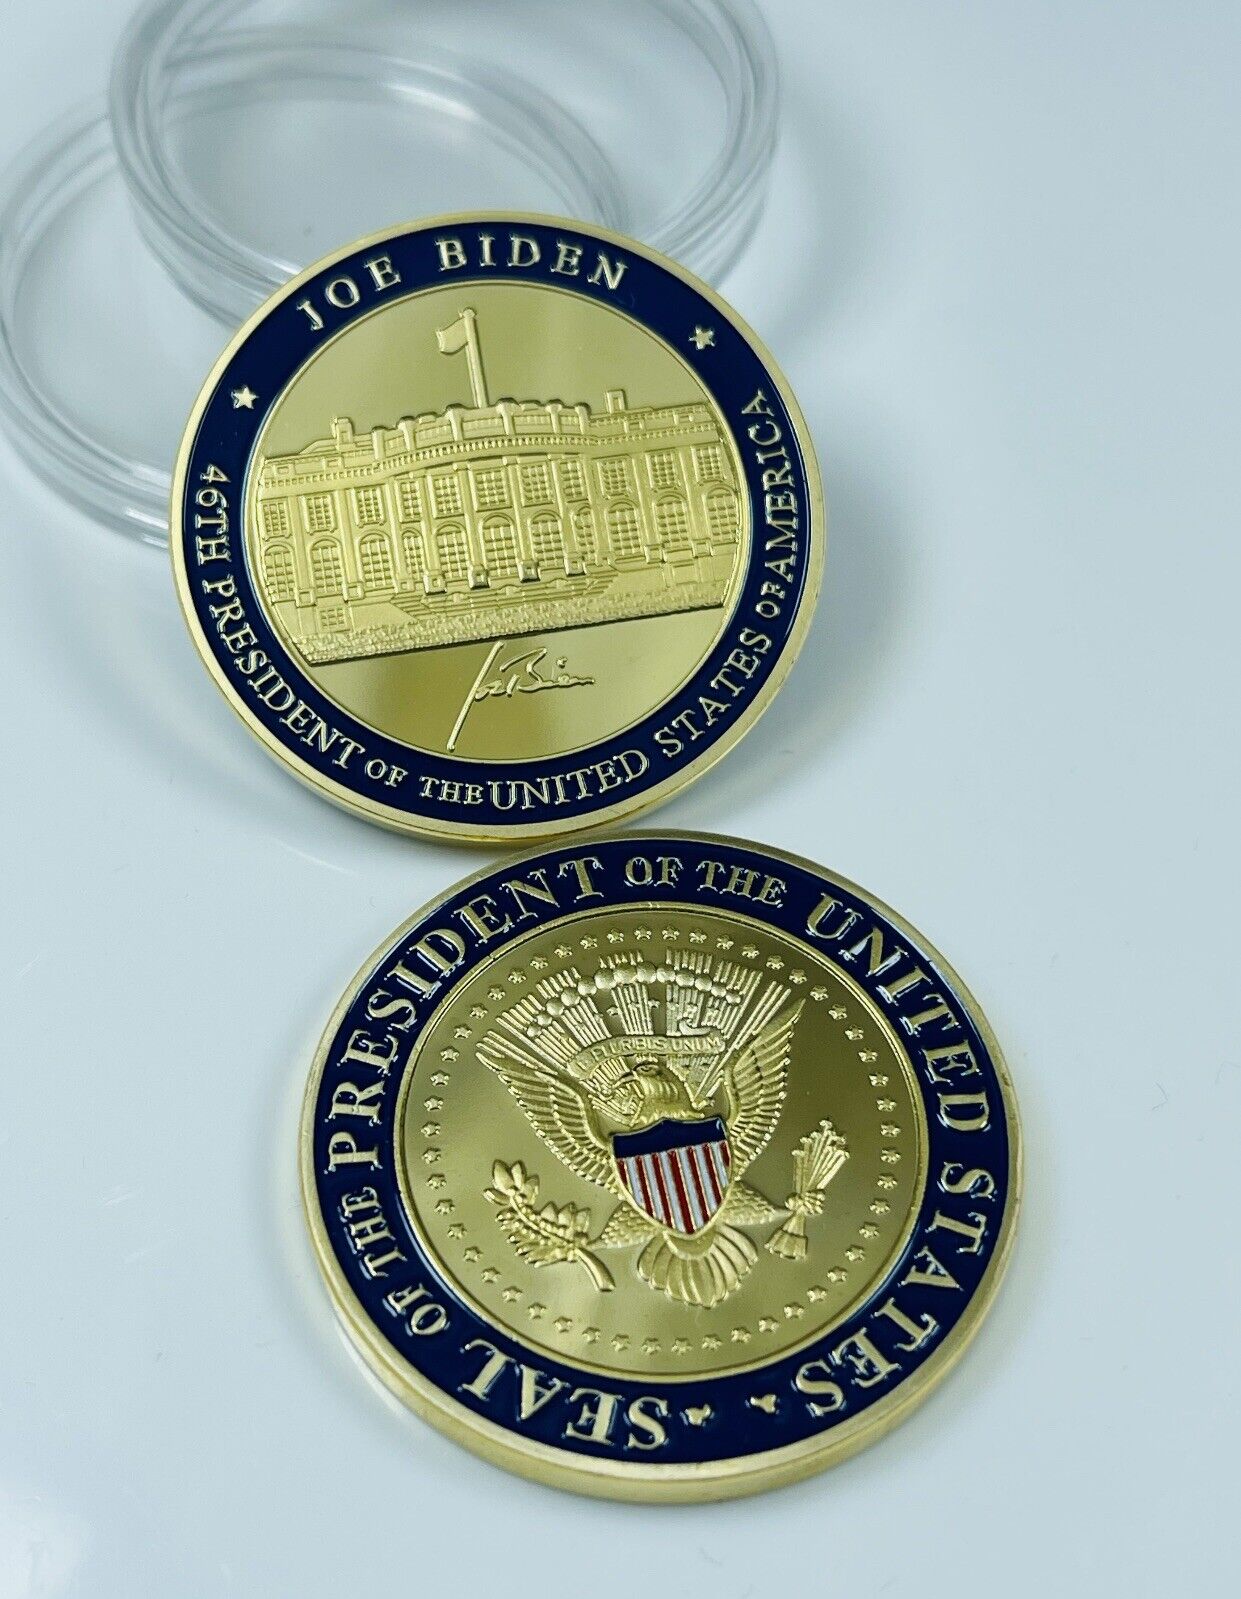 United States of America 46th President Joe Biden Challenge Coin - White House